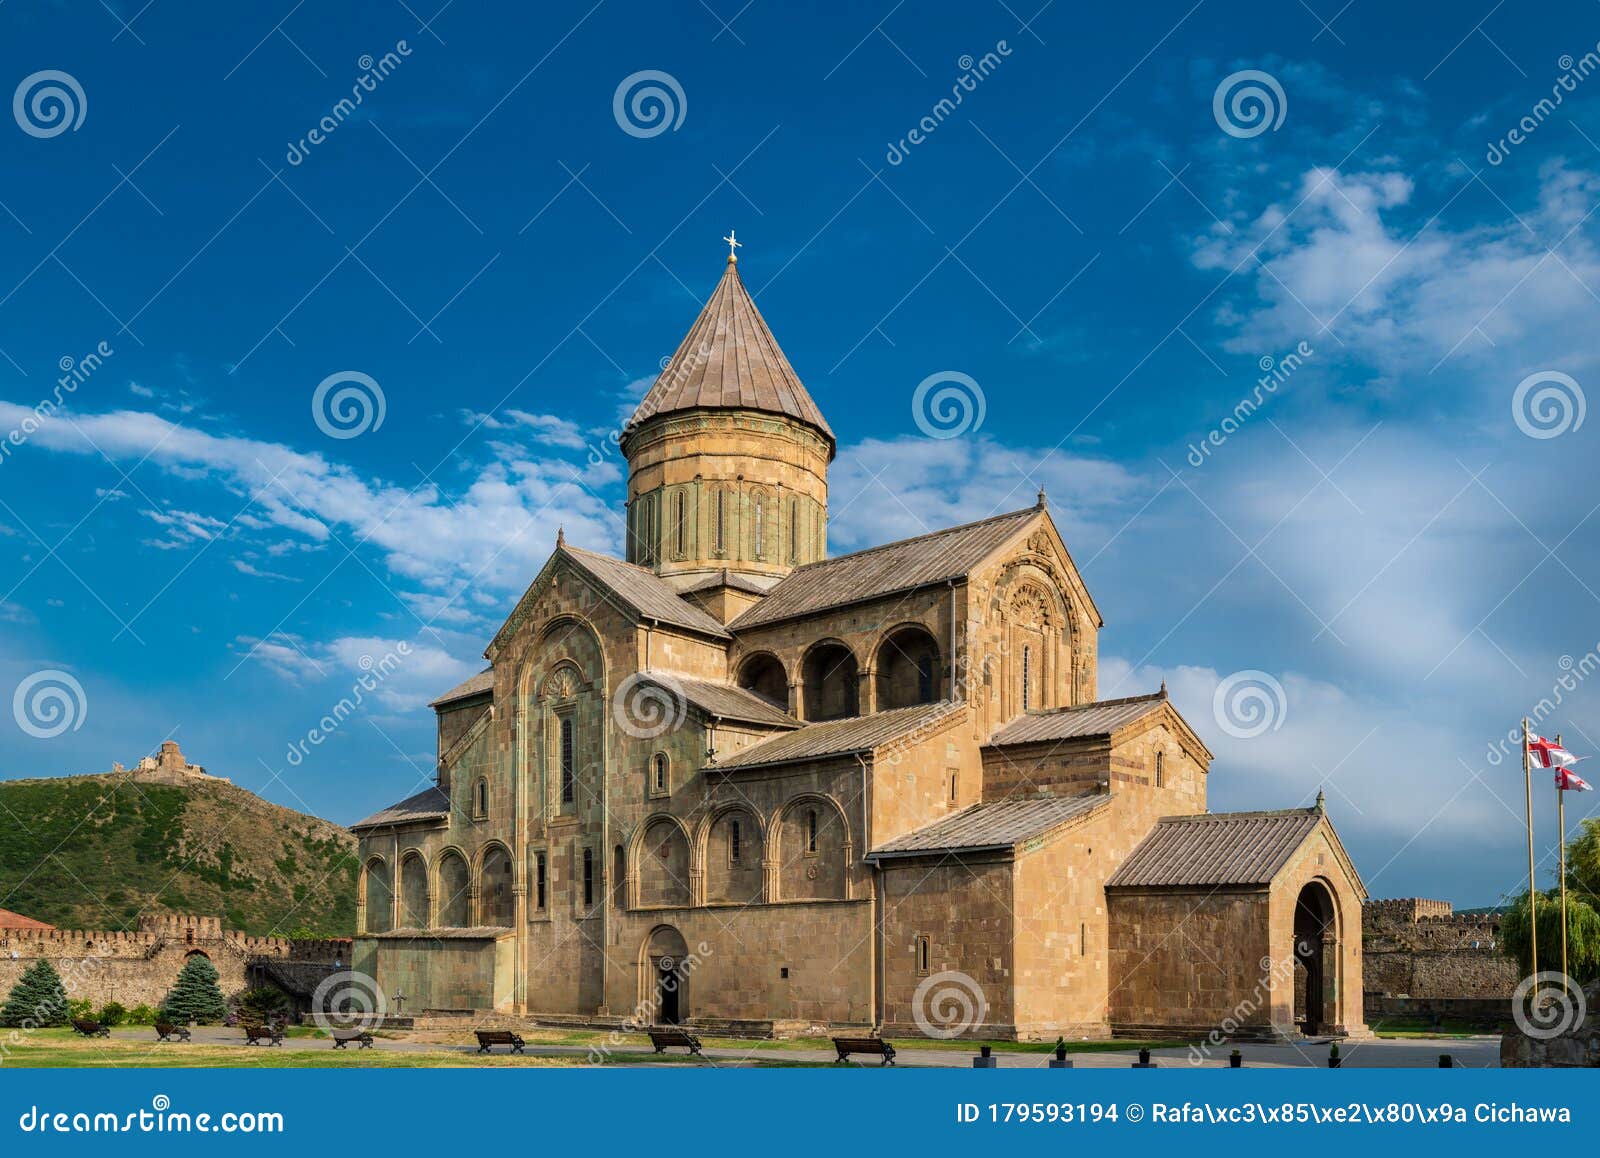 sweti cchoweli cathedral in mtskheta, georgia